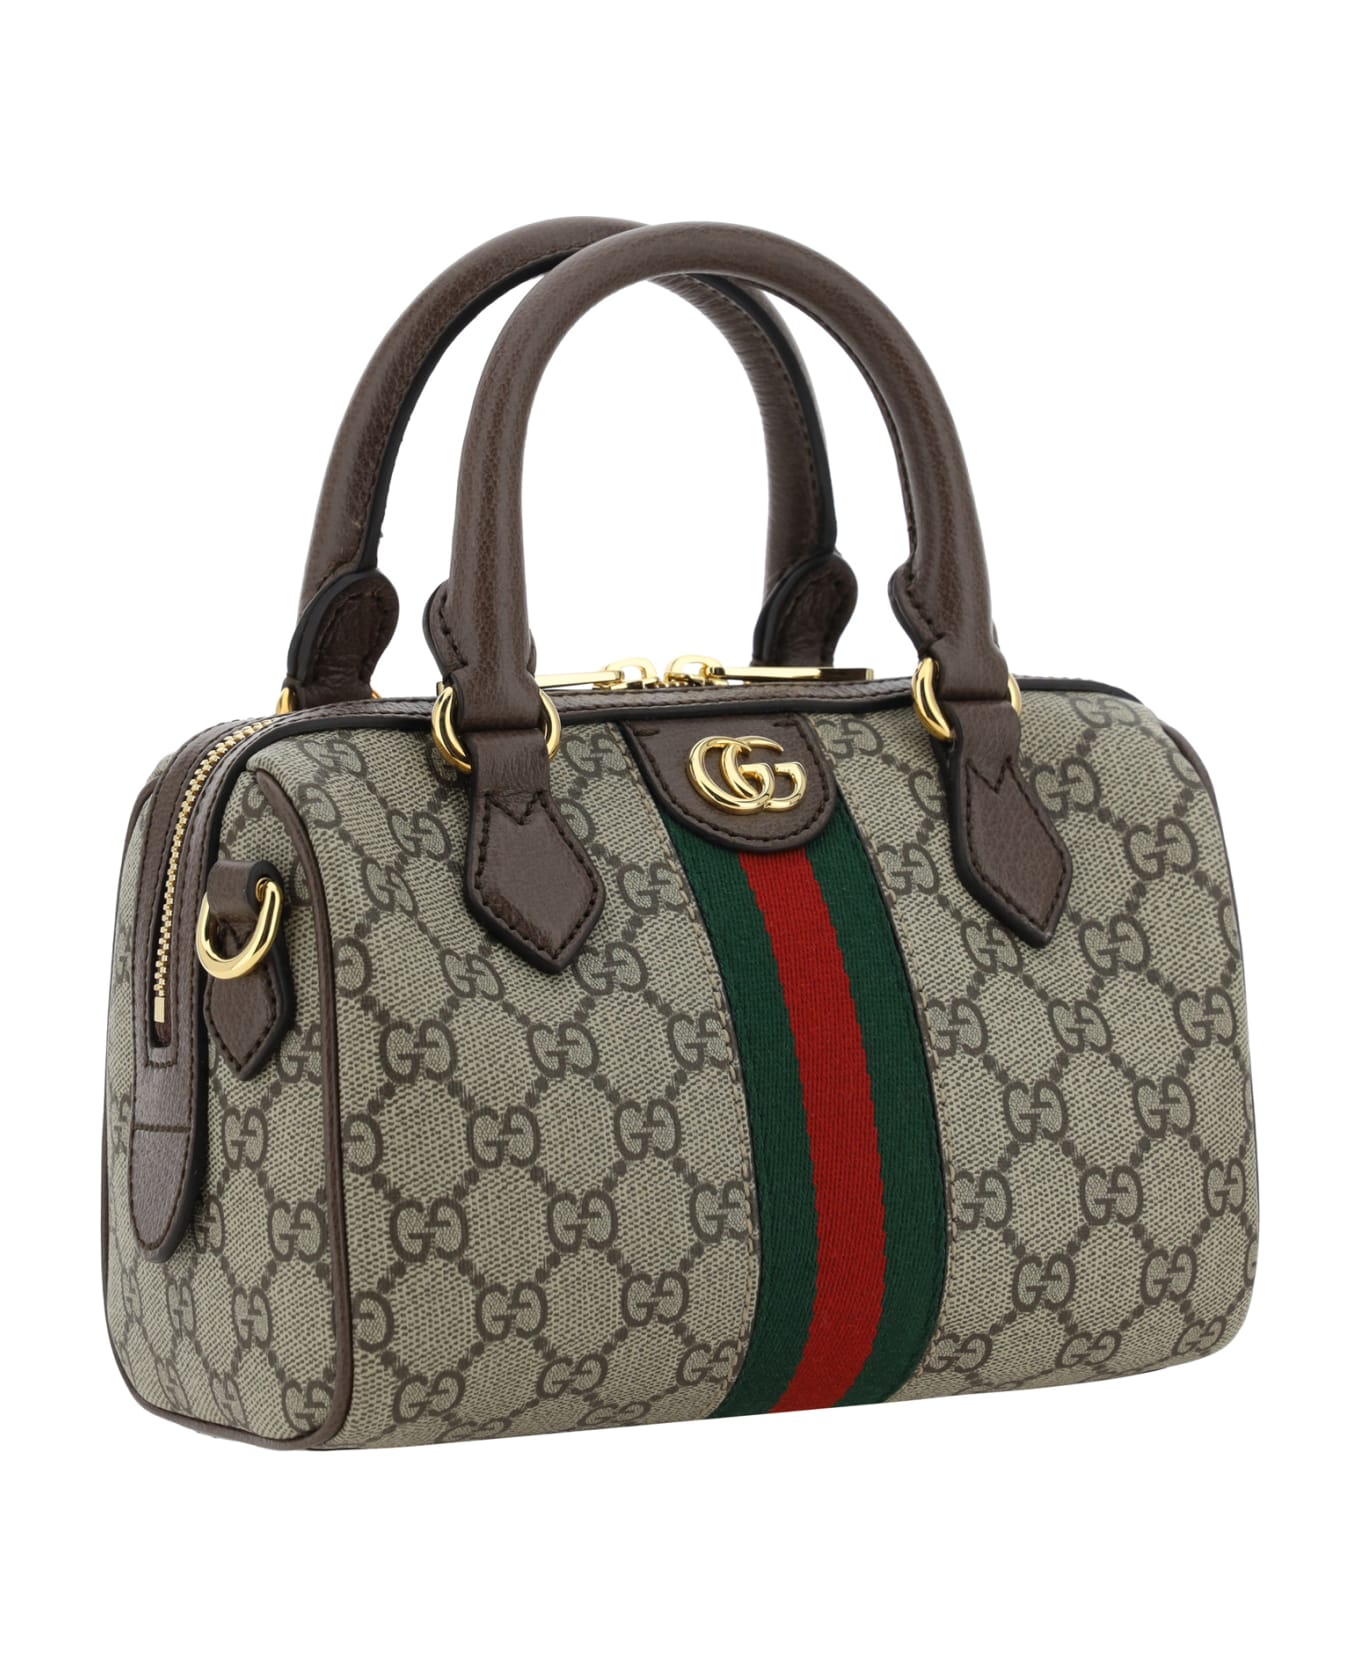 Gucci Ophidia Handbag - Ebony/acero